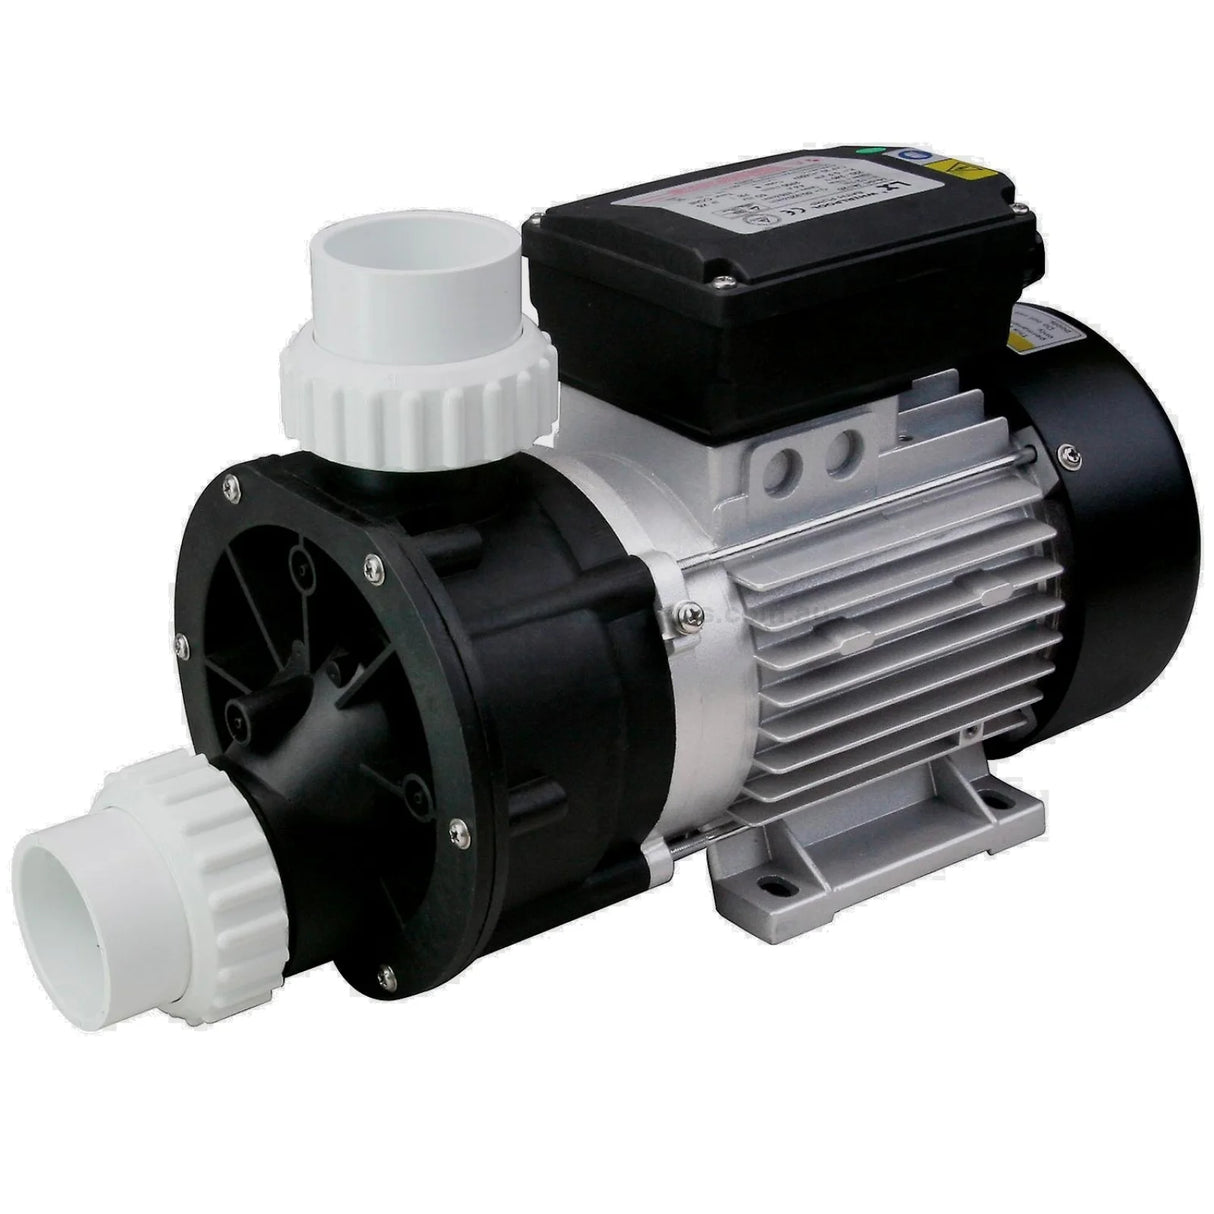 LX Whirlpool JA50 spa circulation pump 0.5hp, 375w - Heater and Spa Parts